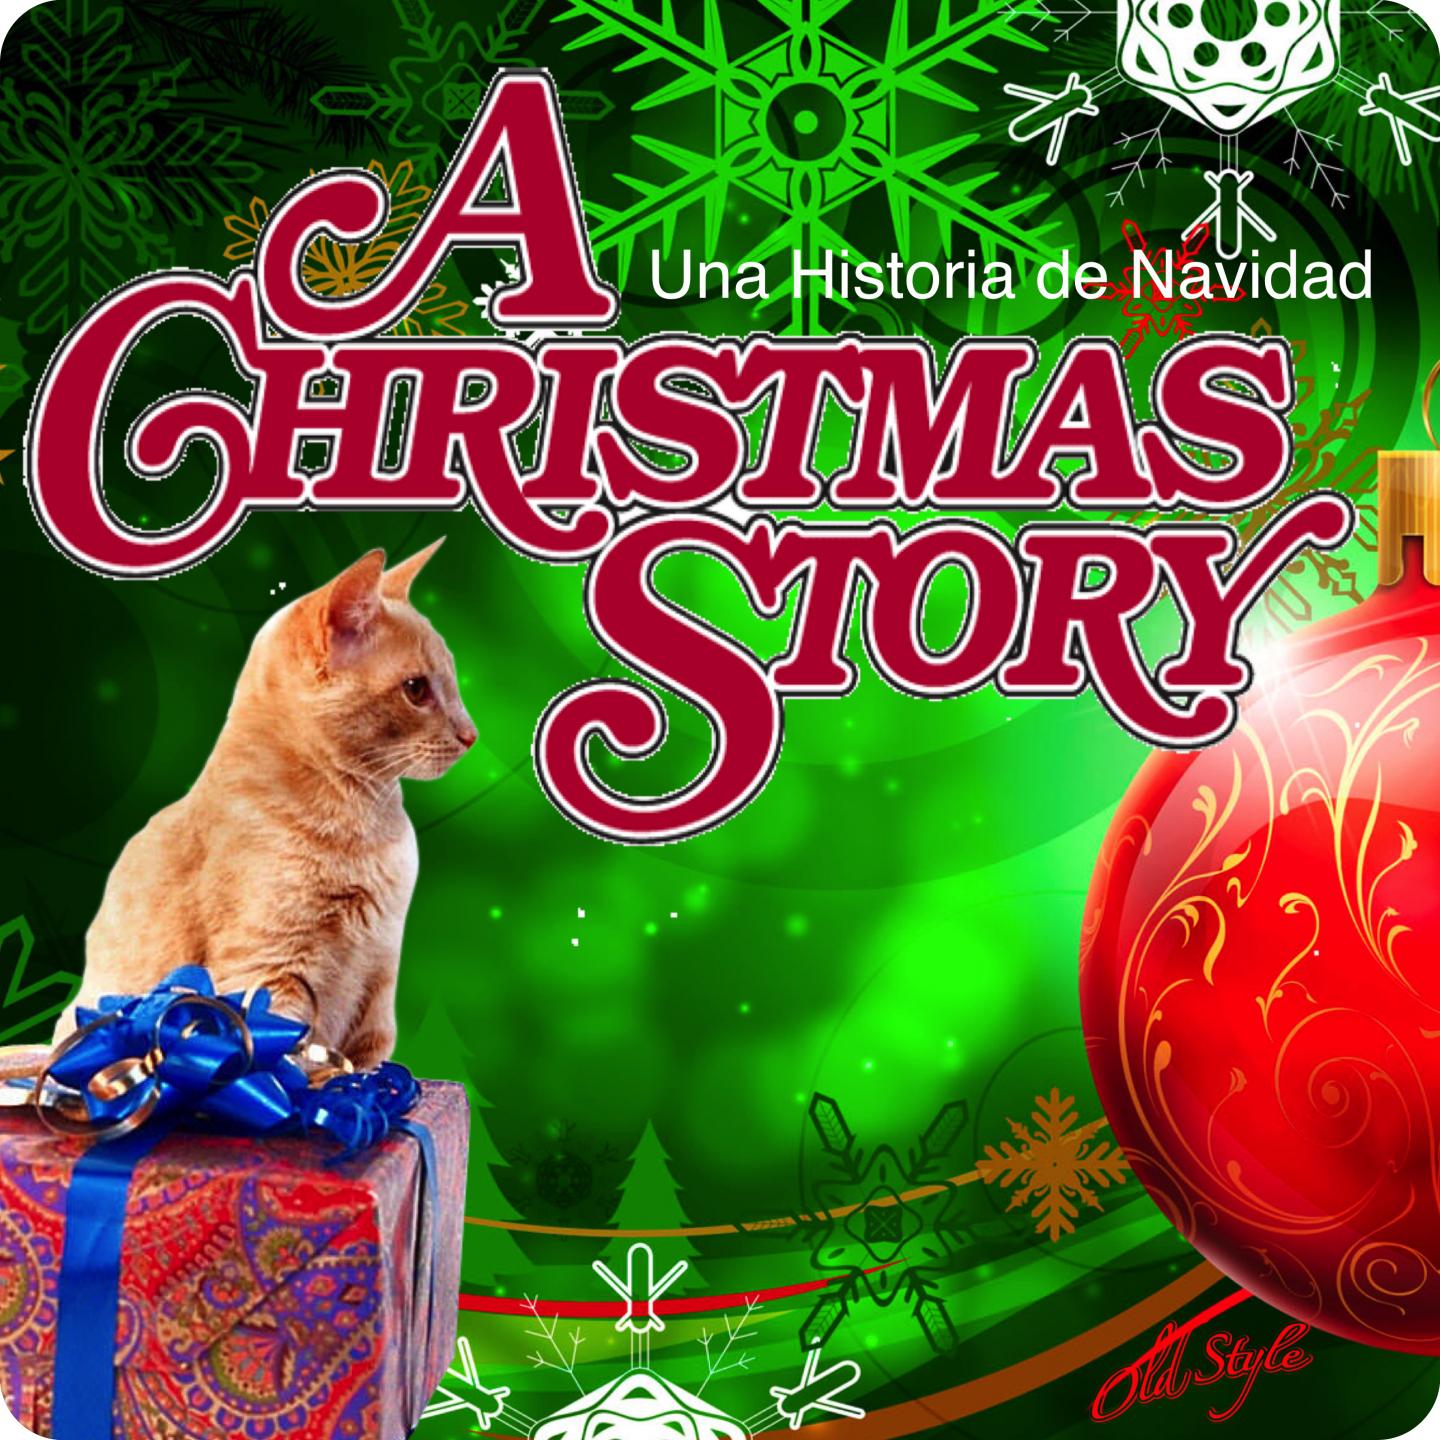 A Christmas Story (Una Historia de Navidad)